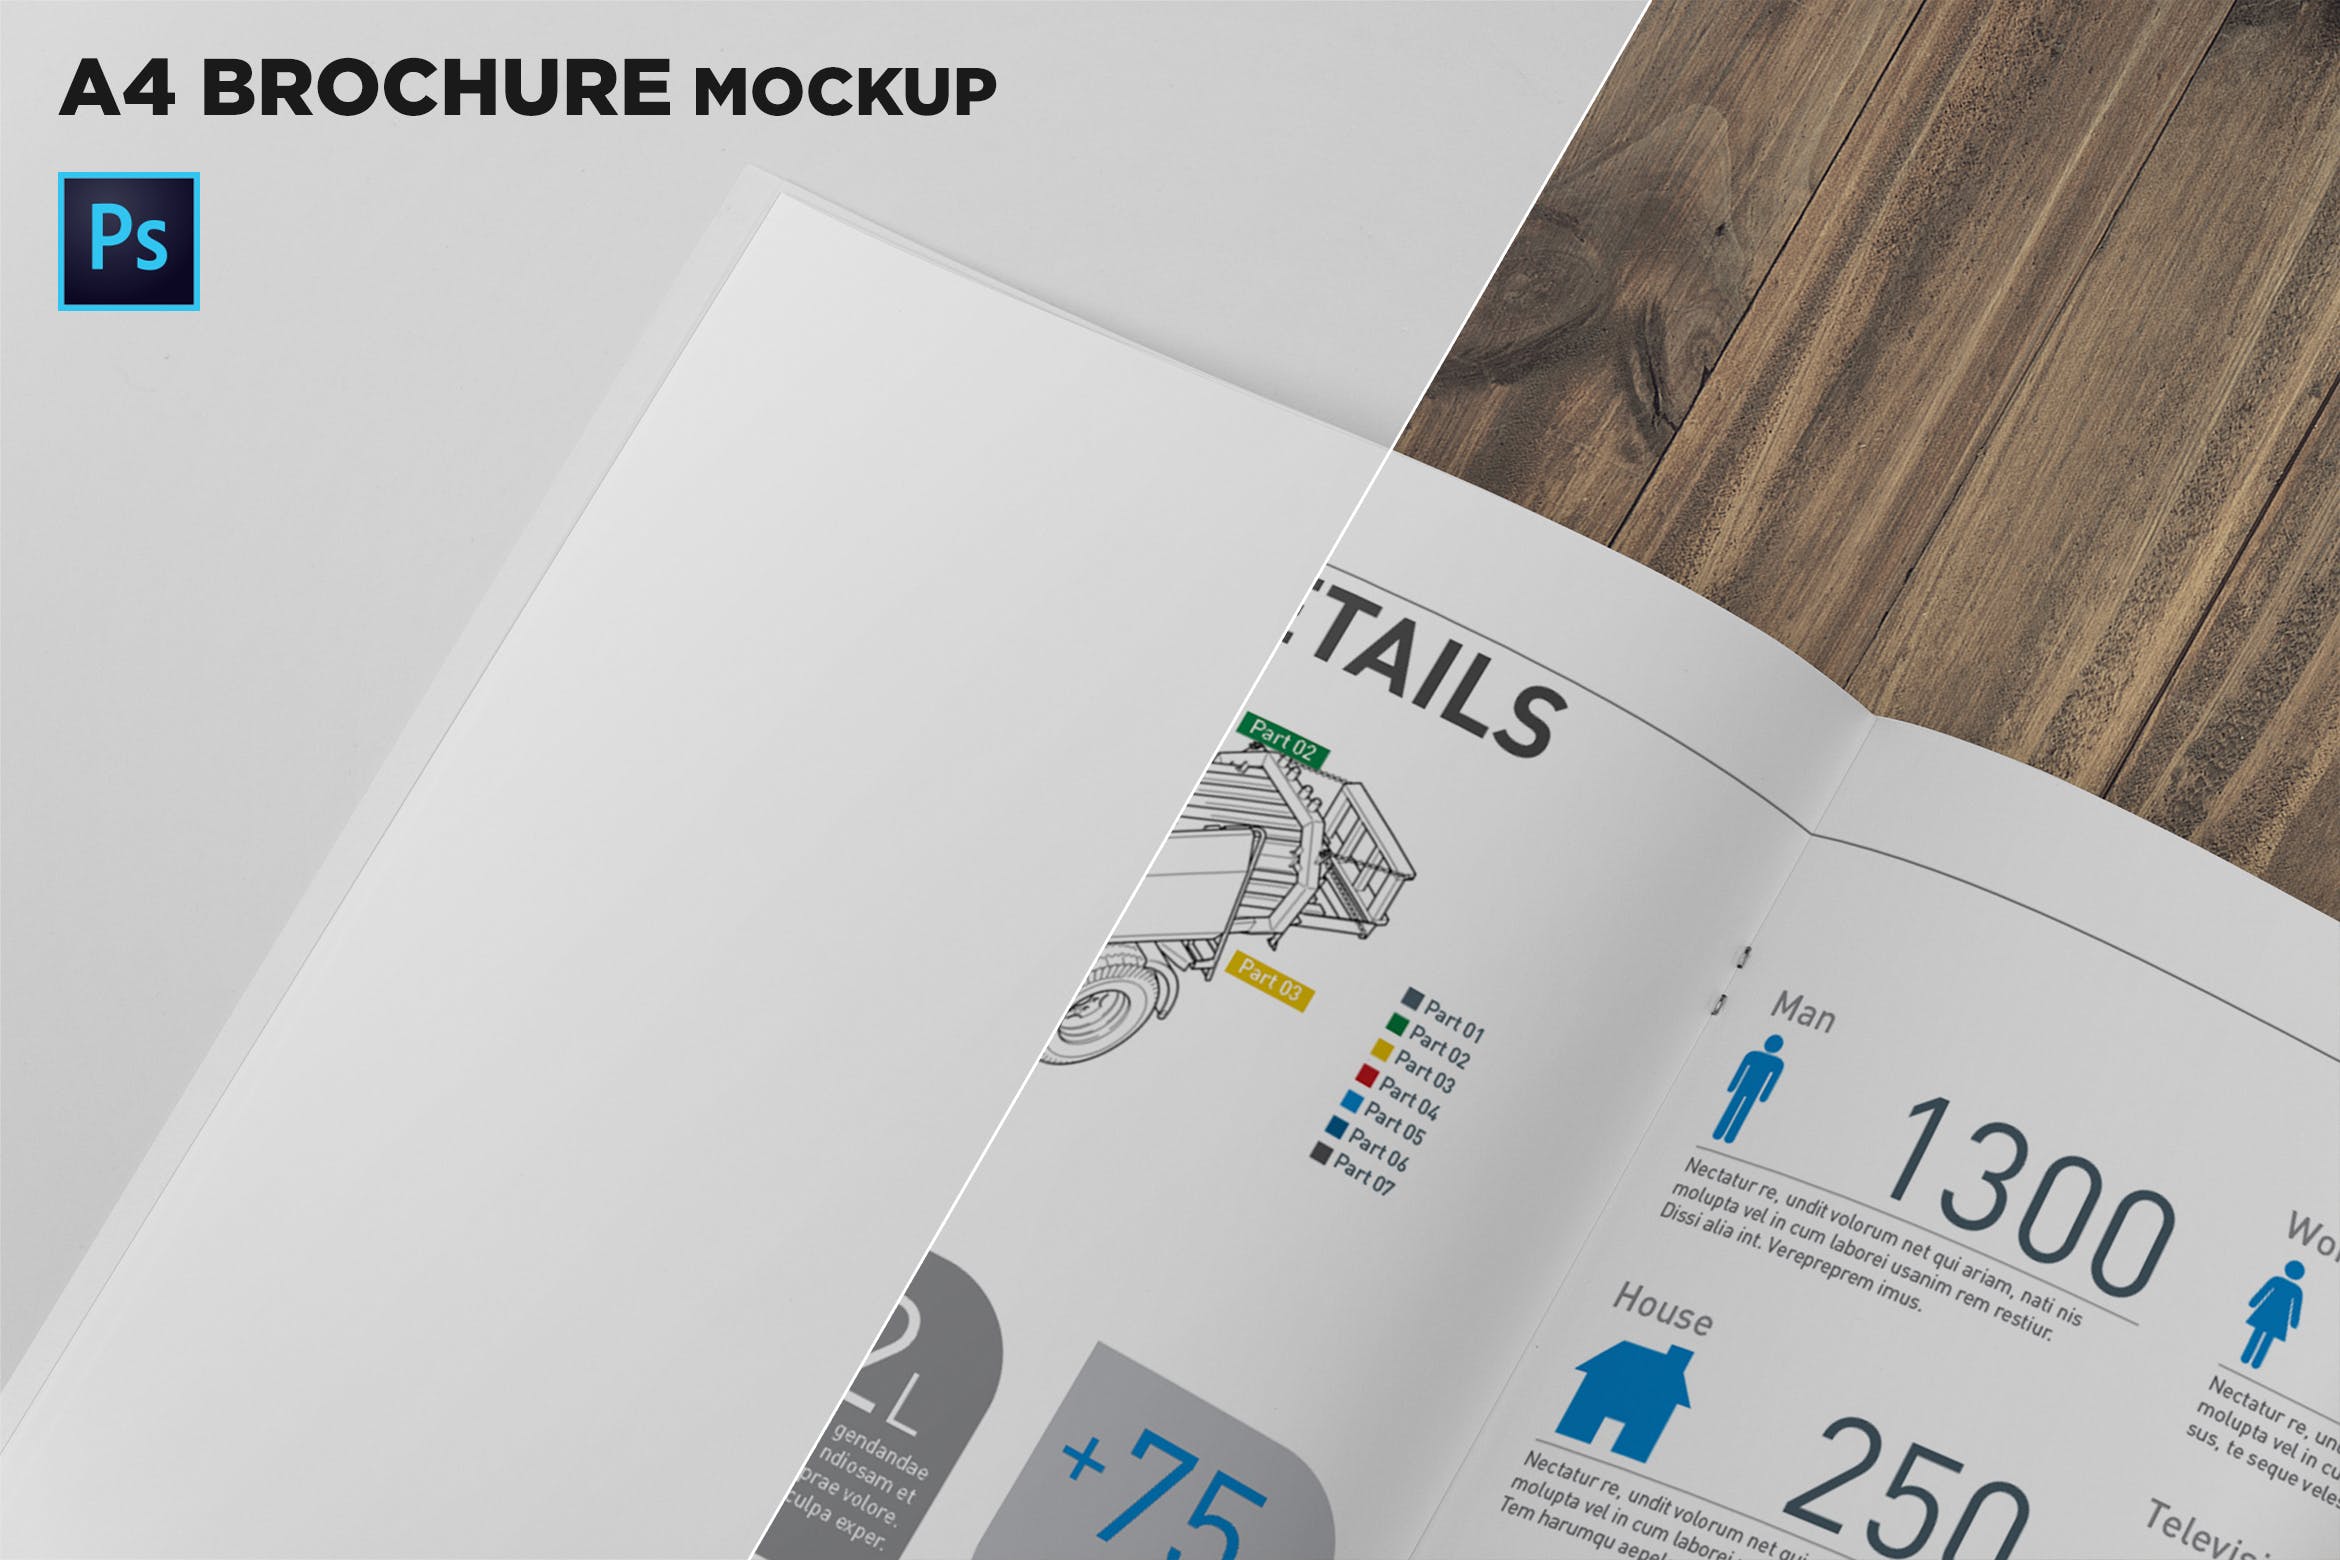 A4尺寸企业/品牌宣传册内页特写样机蚂蚁素材精选模板 A4 Brochure Page Closeup Mockup插图